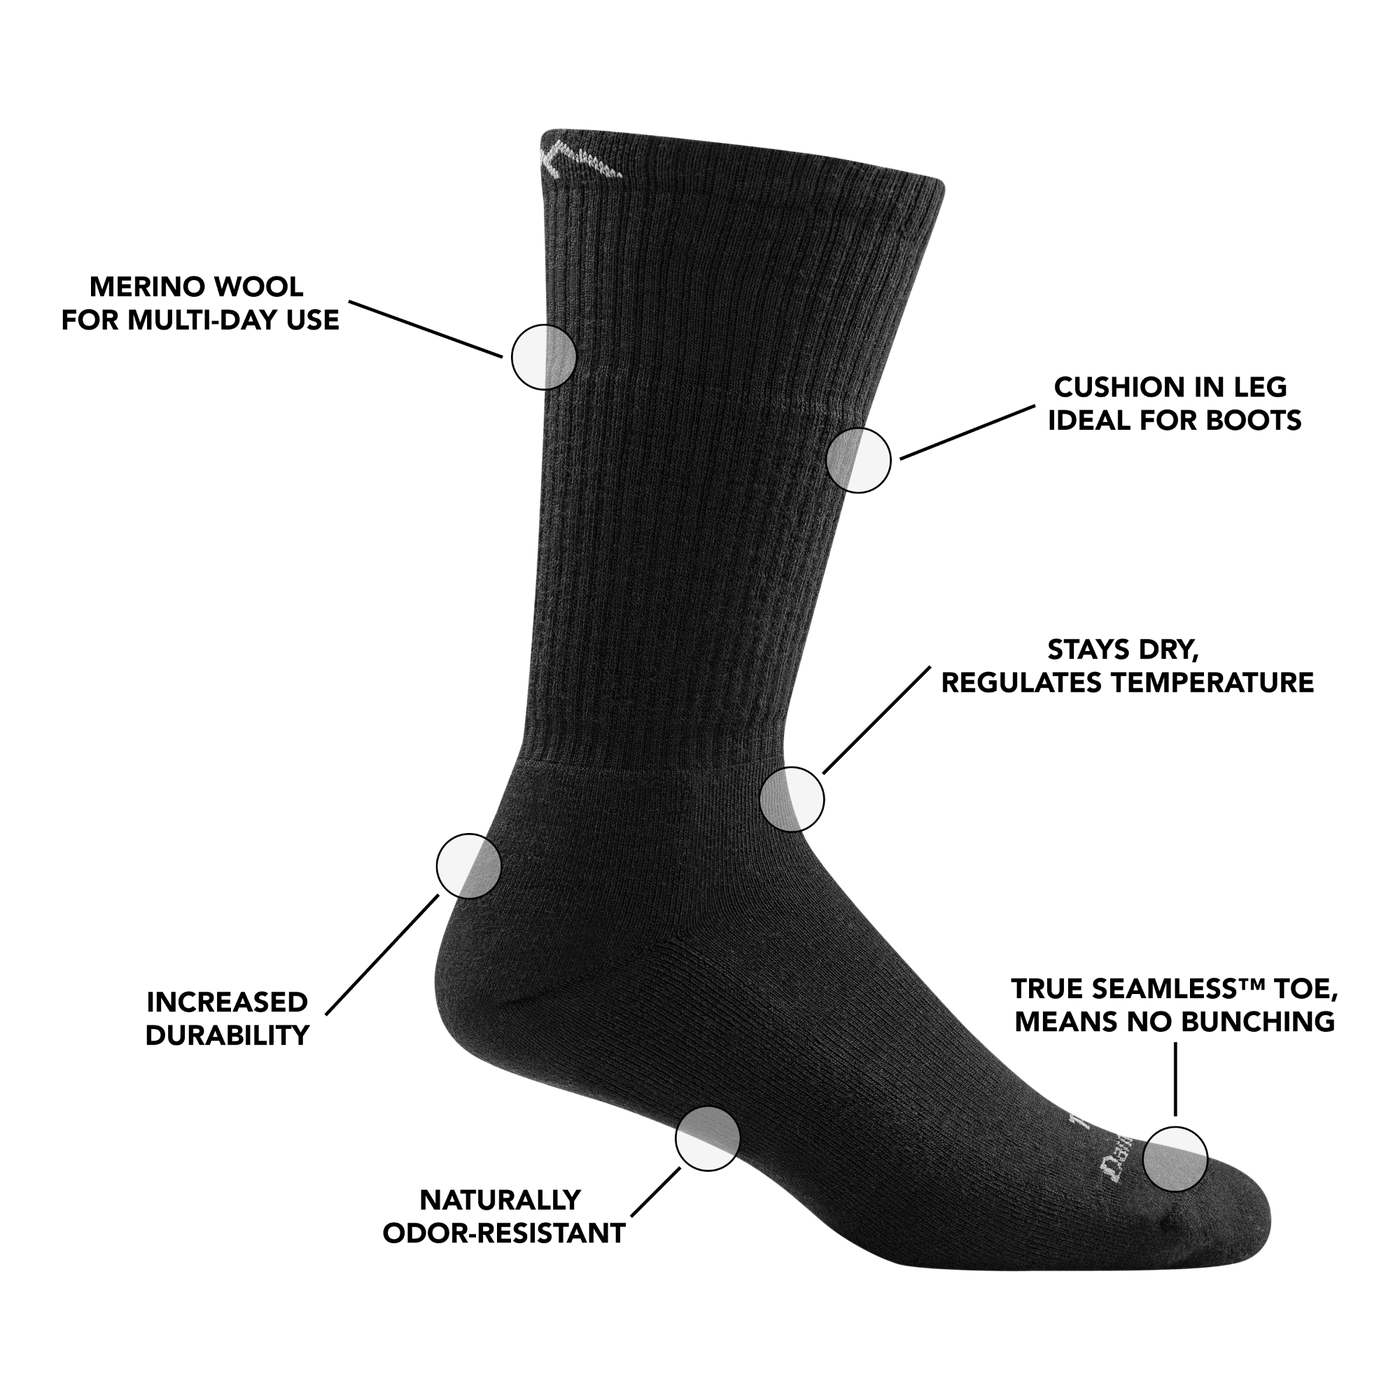 T4021 Tactical Boot Socks – Darn Tough